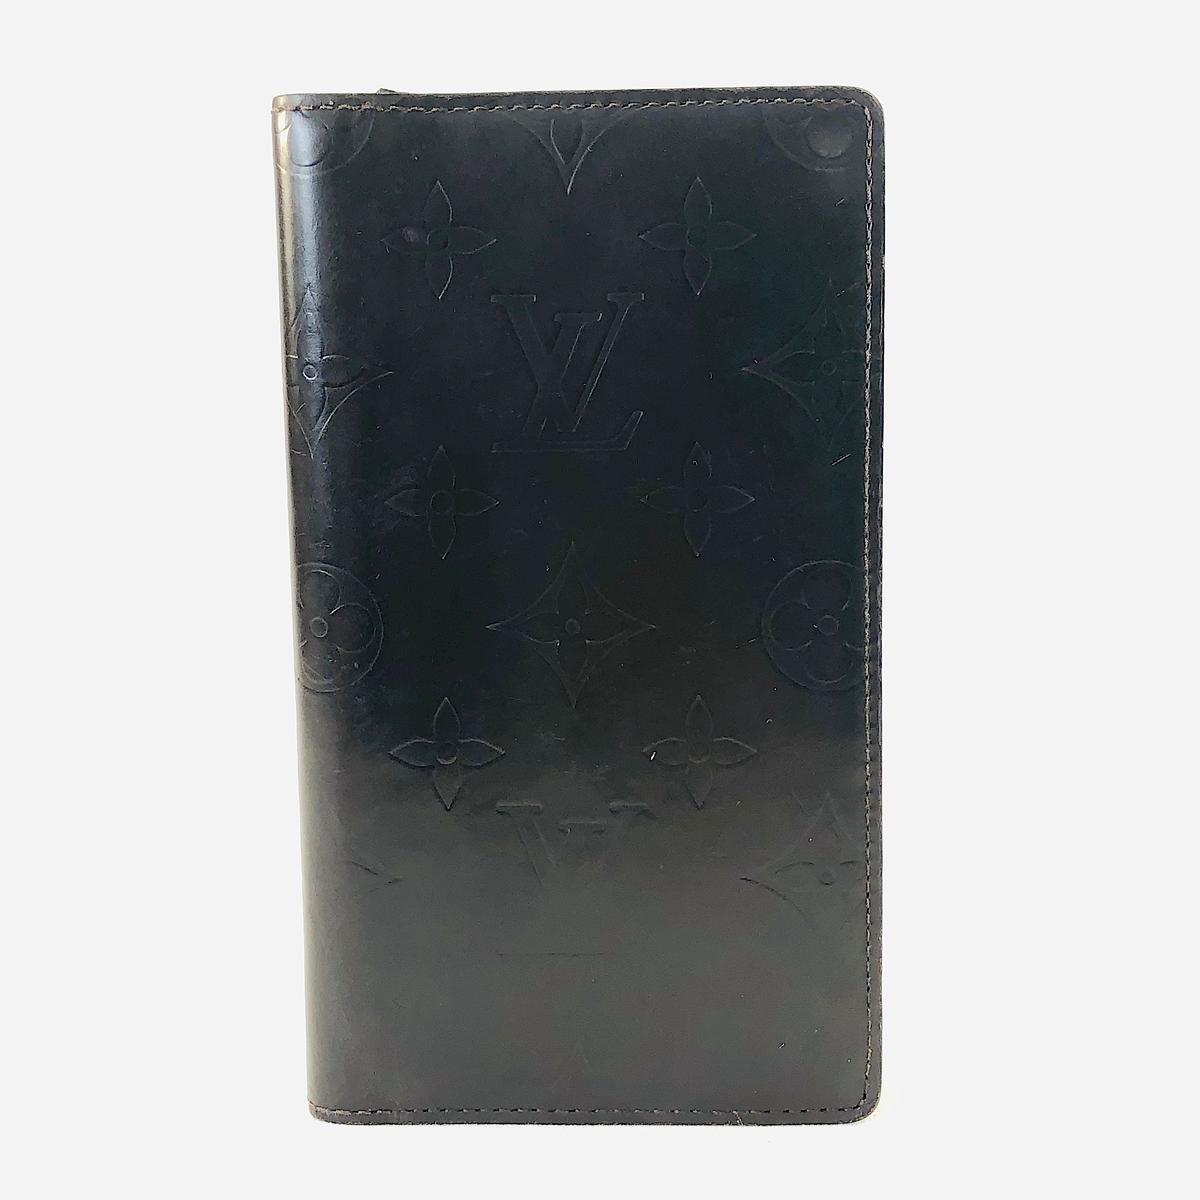 Authentic estate Louis Vuitton leather address book